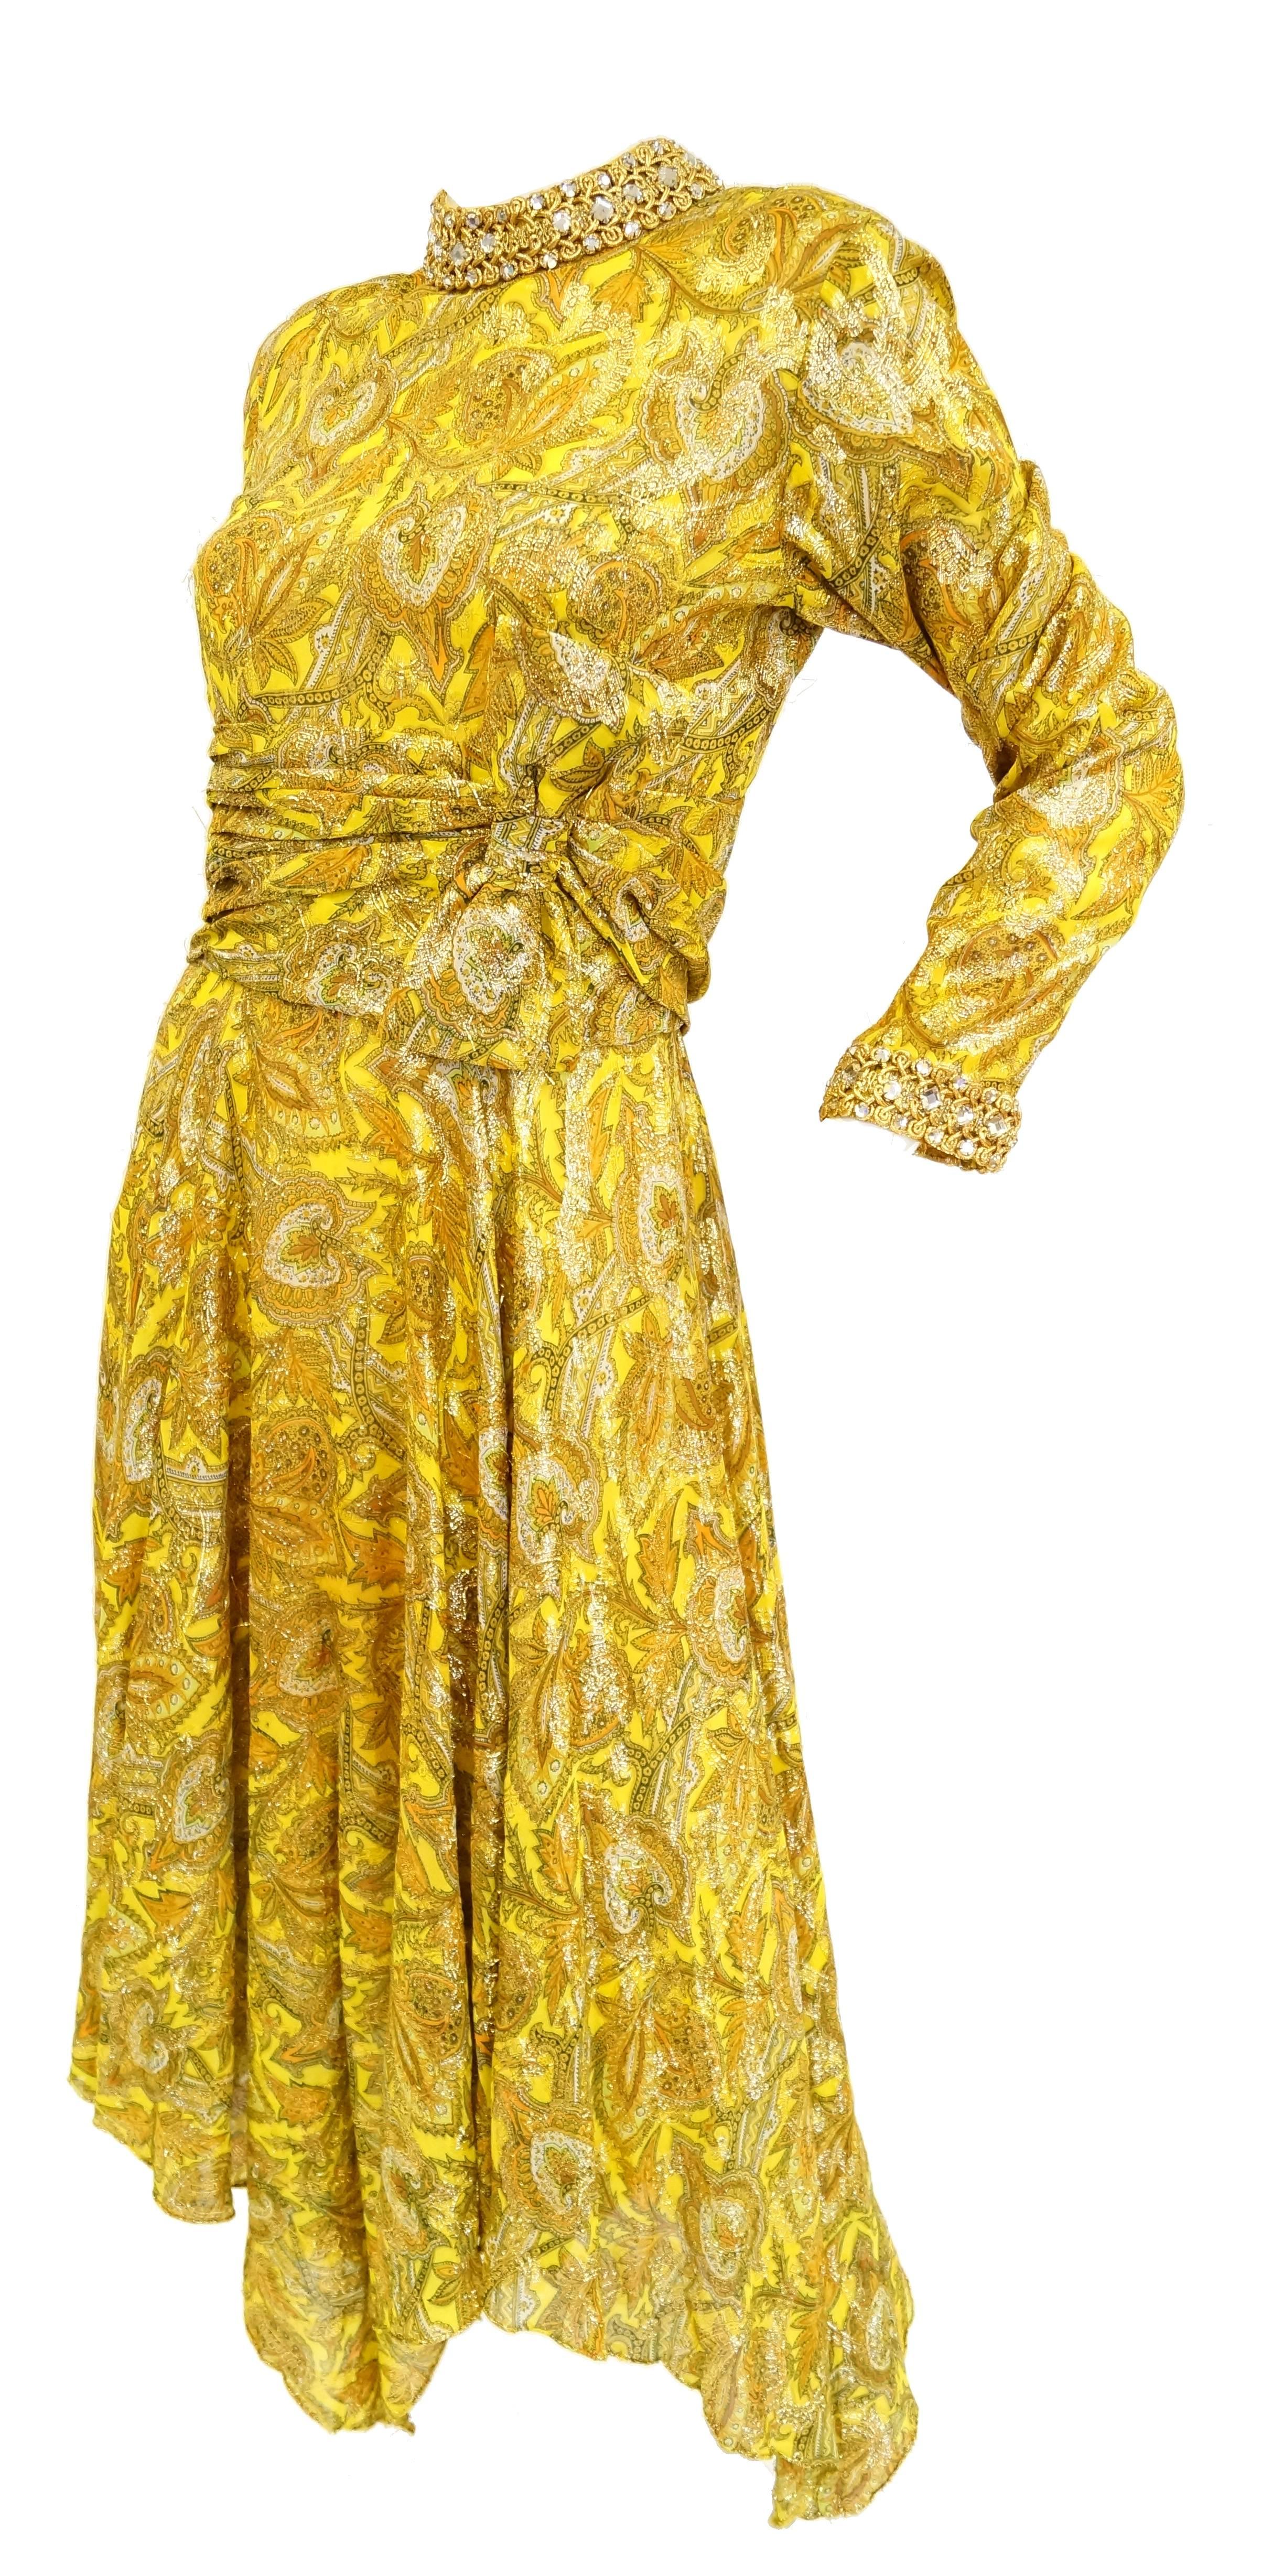 Brown 1960s Metallic Mod Dress w/ Rouching & Rhinestone Details